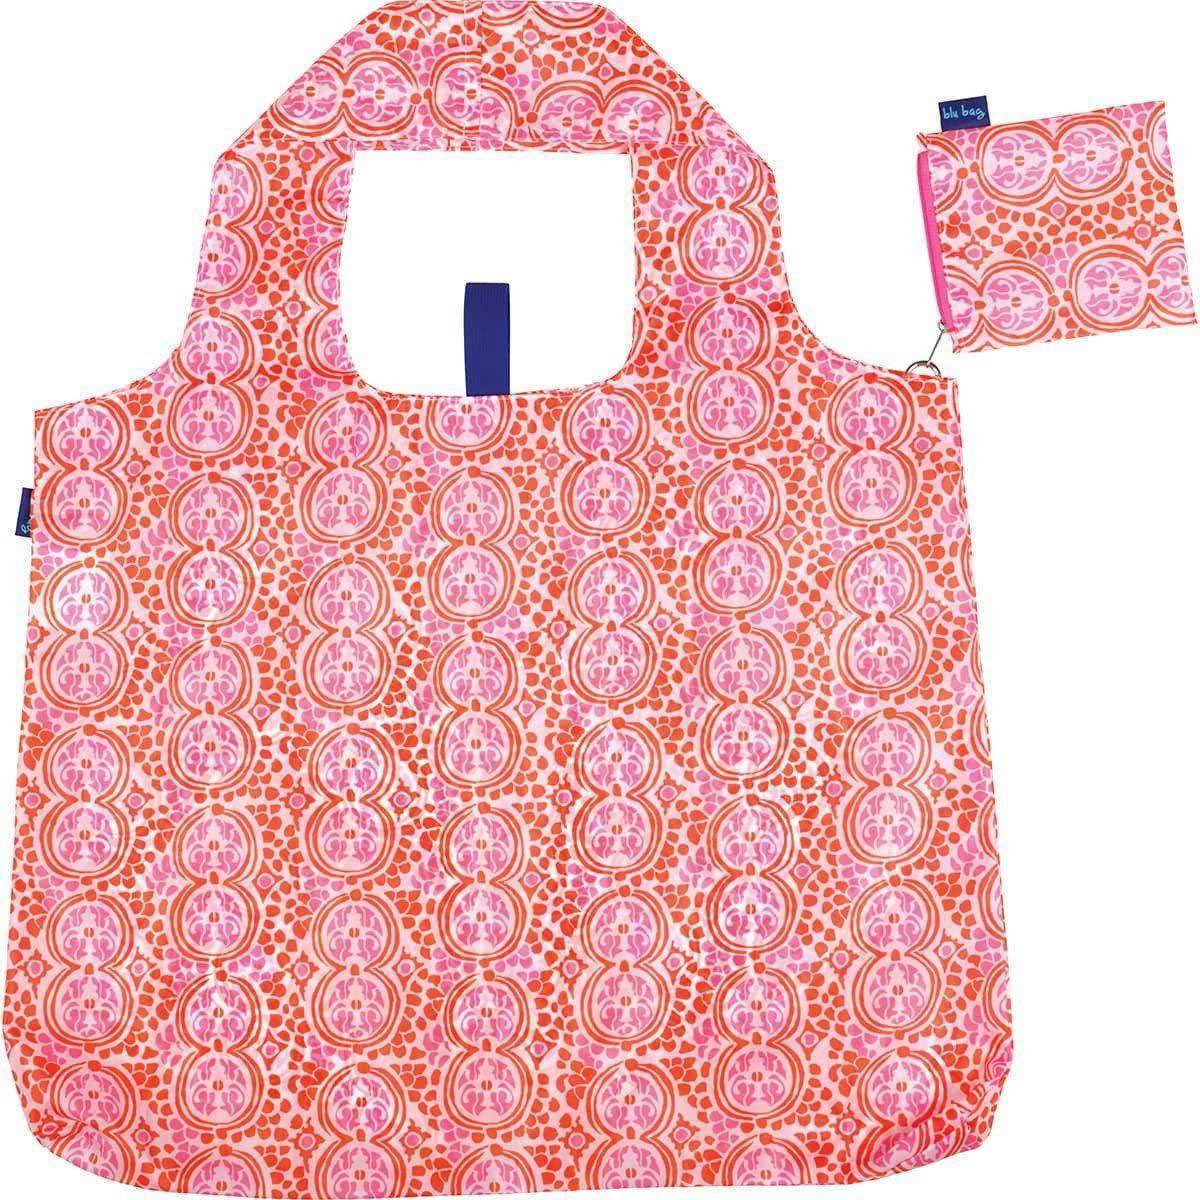 blu bag reusable shopping bag in pink and orange floral print